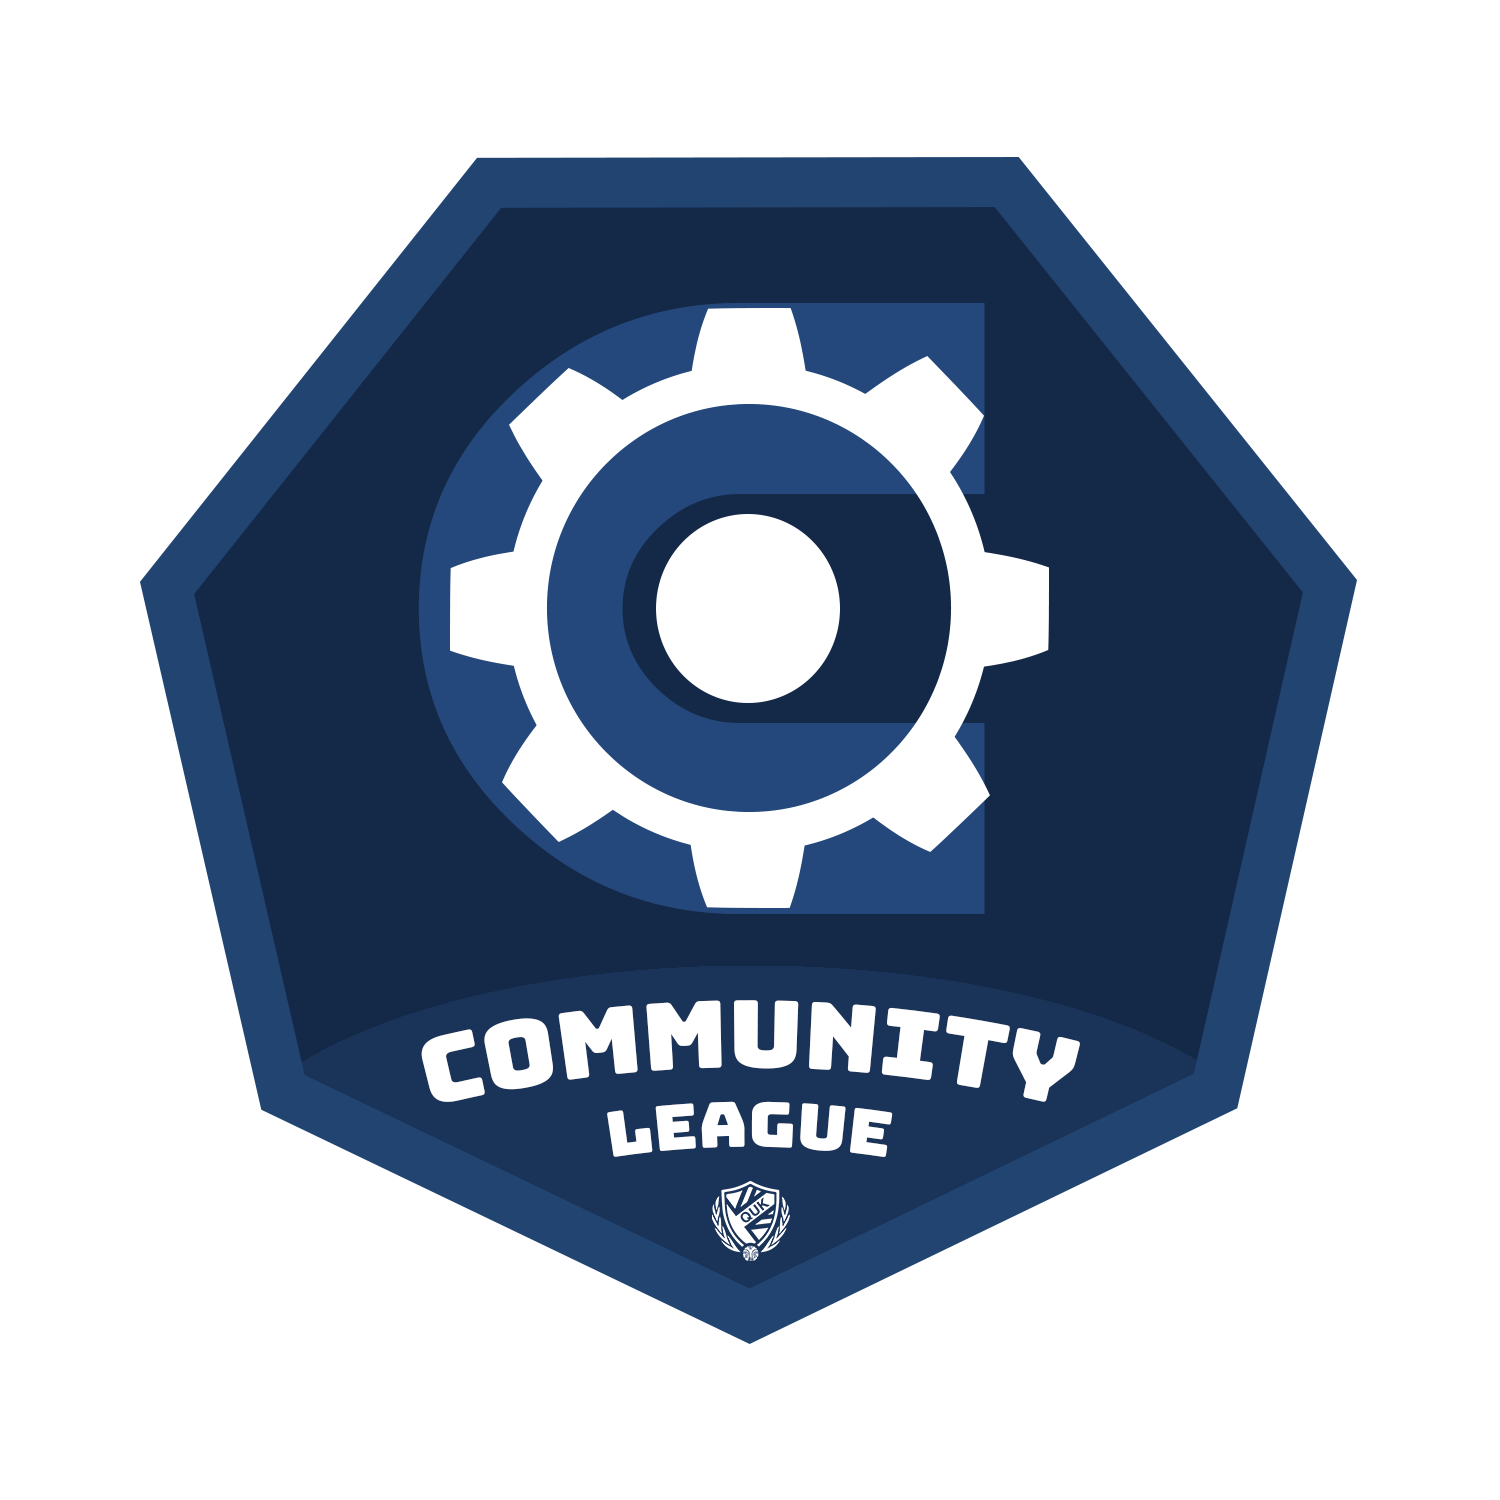 Community Division 2 Fixture One logo